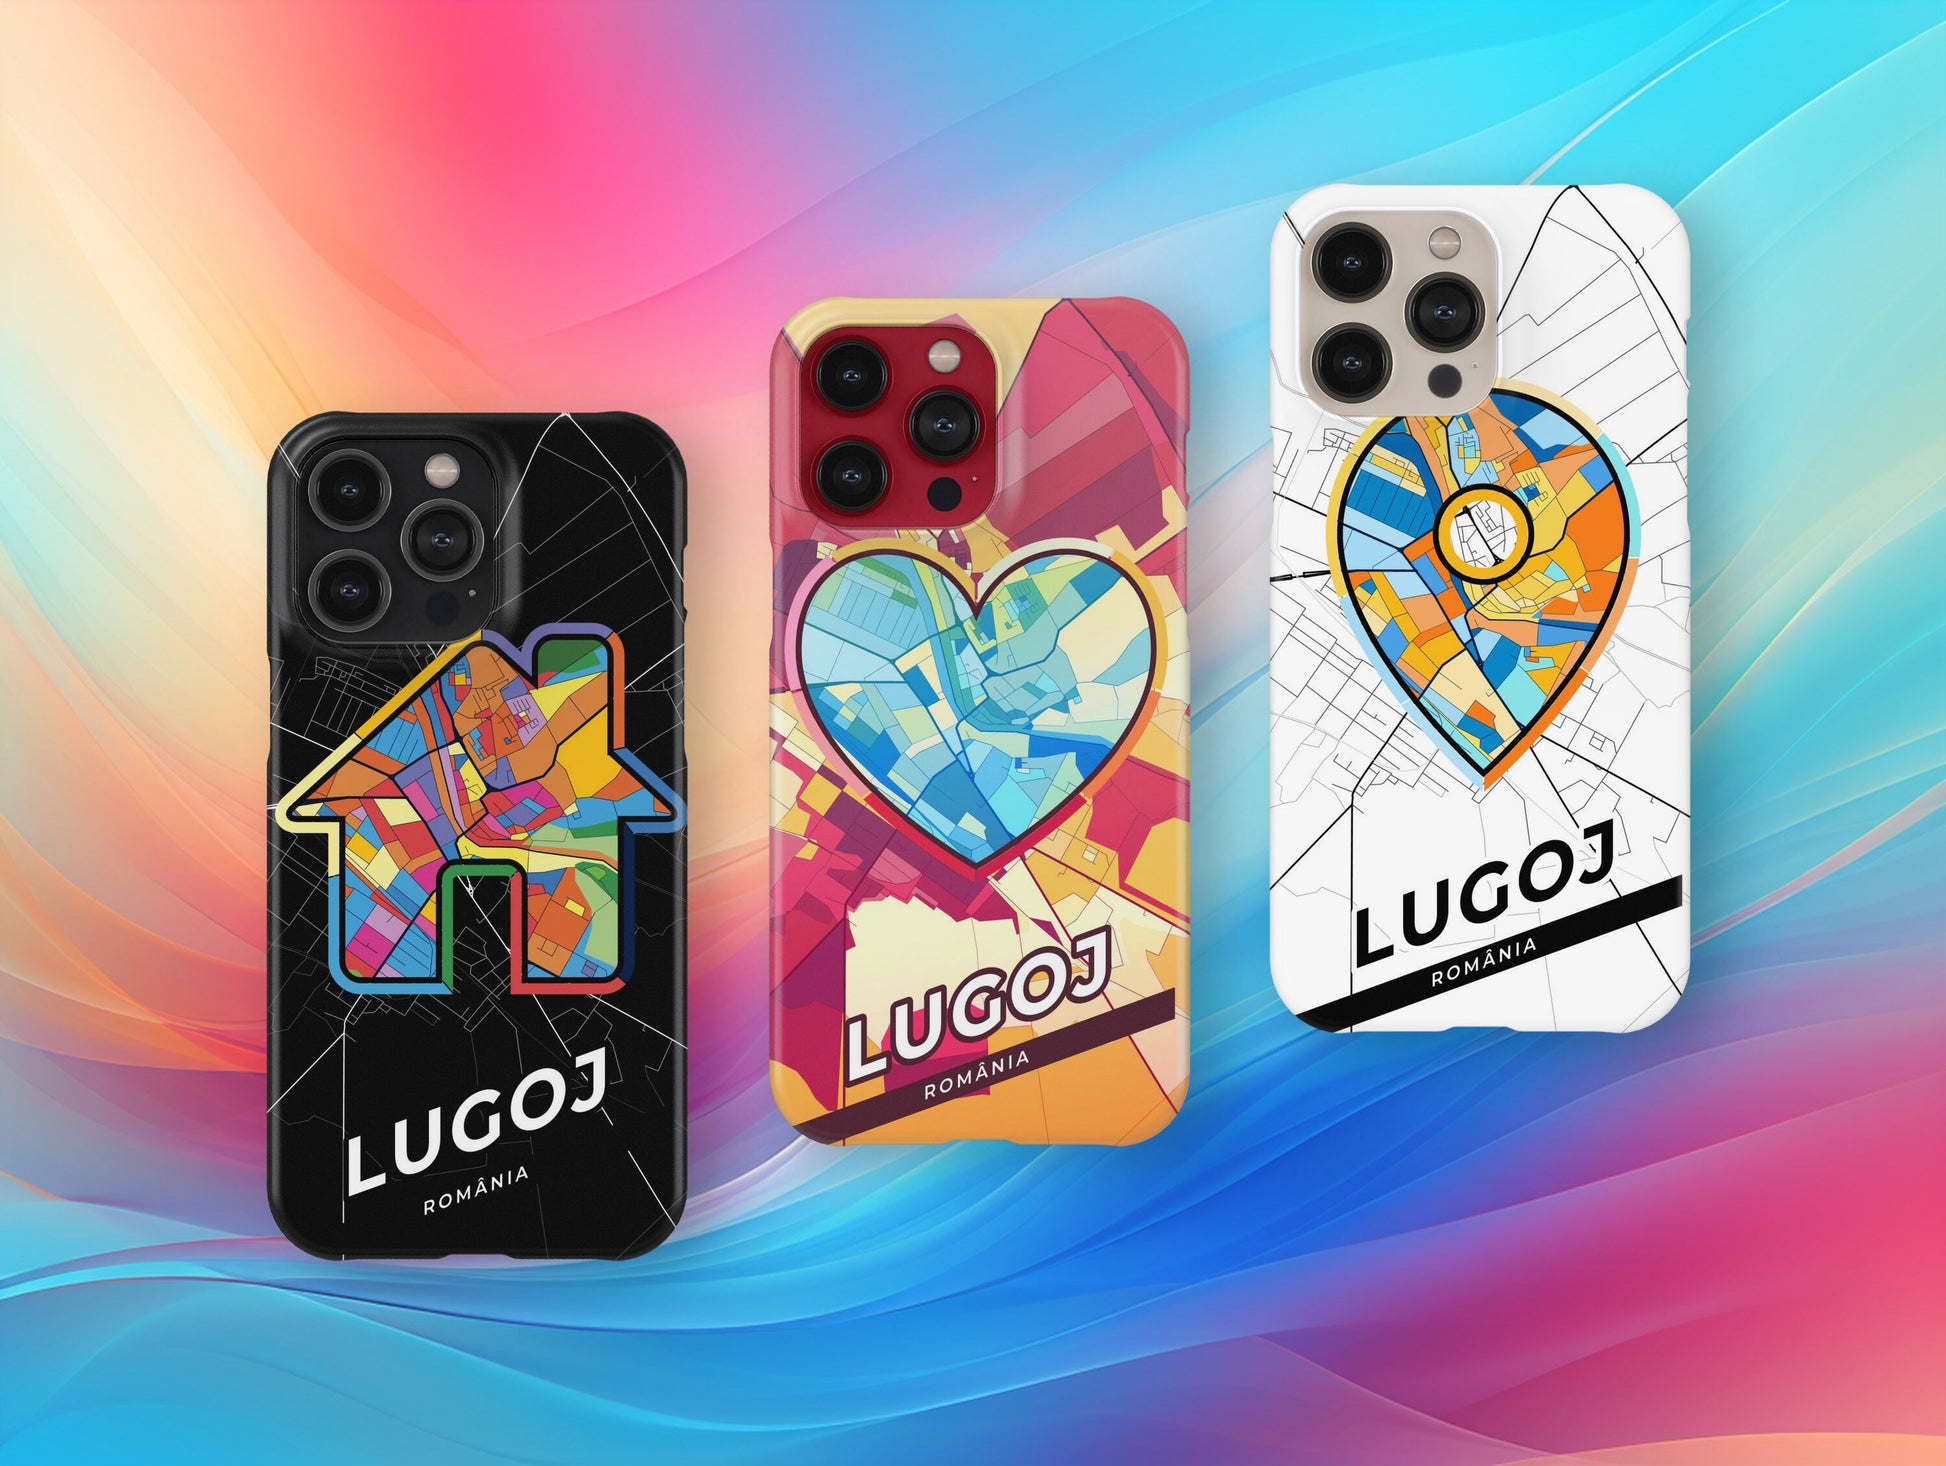 Lugoj Romania slim phone case with colorful icon. Birthday, wedding or housewarming gift. Couple match cases.